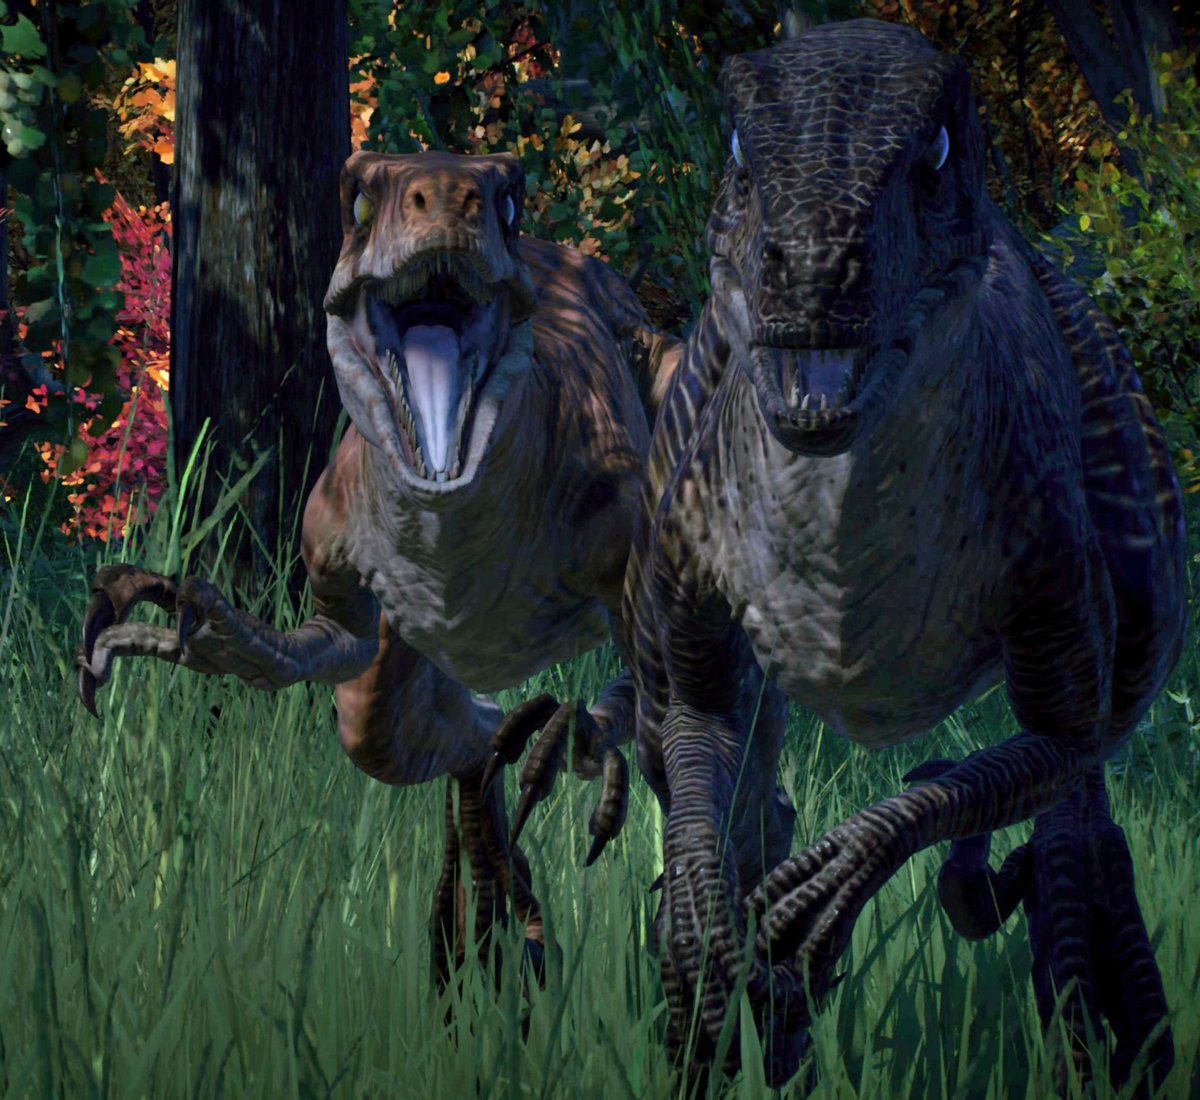 DON'T GO TO THE LONG GRASS!!!
#PS5Share #PlayStation #jurassicpark #PlayStation5 #PS5 #VirtualPhotography #JurassicWorldEvolution #dinosaurs #Dinovember2023 #JurassicWorldEvolution2 #animals #Velociraptor #droameosauridae #IslaSorna #SiteB